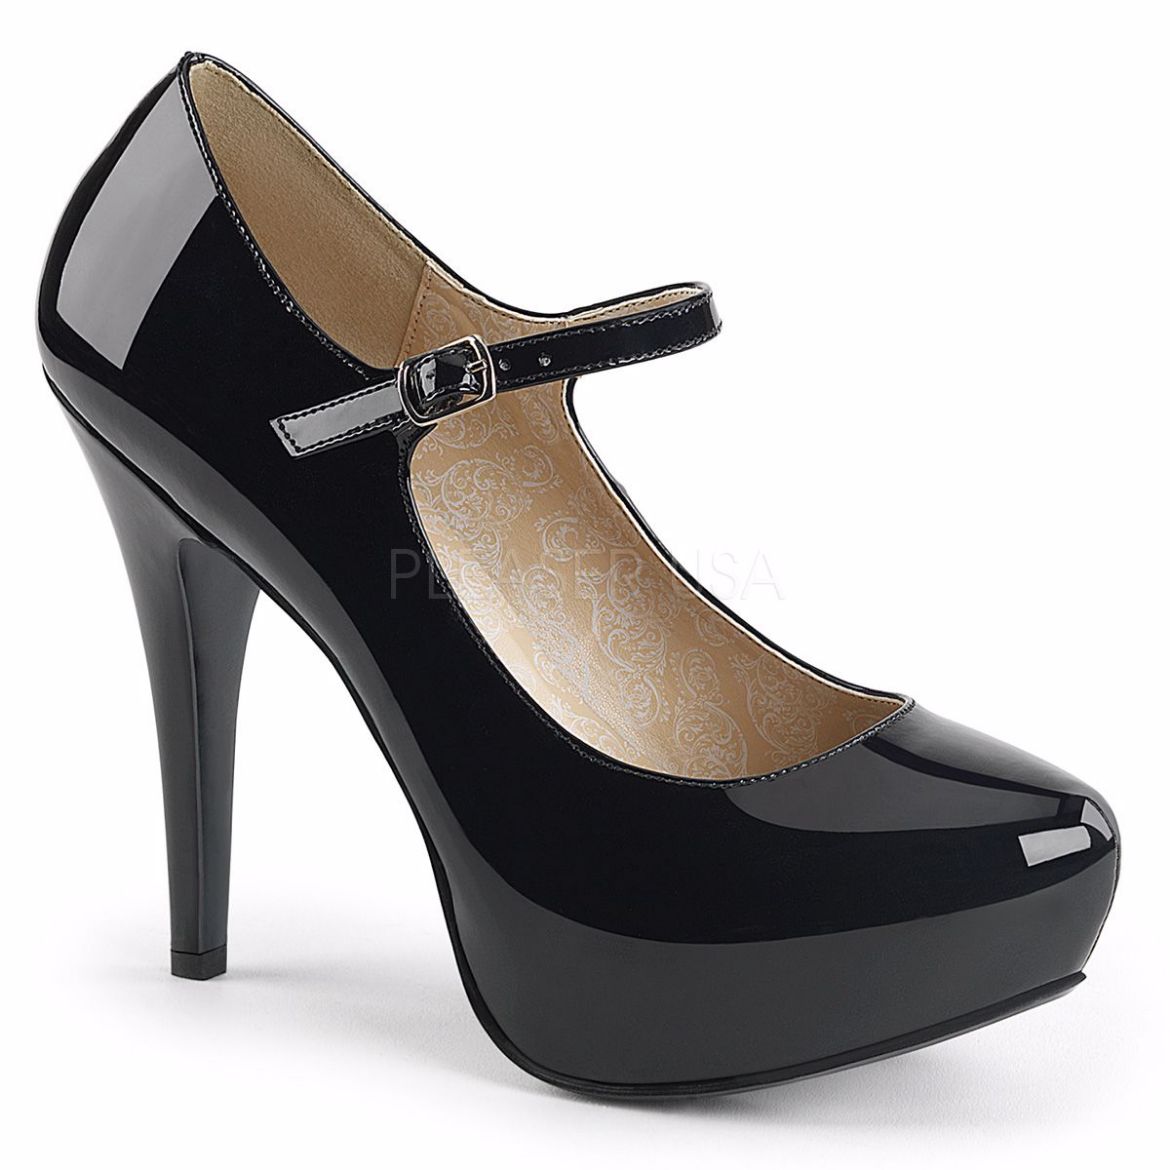 Product image of Pleaser Pink Label Chloe-02 Black Patent, 5 1/4 inch (13.3 cm) Heel, 1 1/4 inch (3.2 cm) Platform Court Pump Shoes